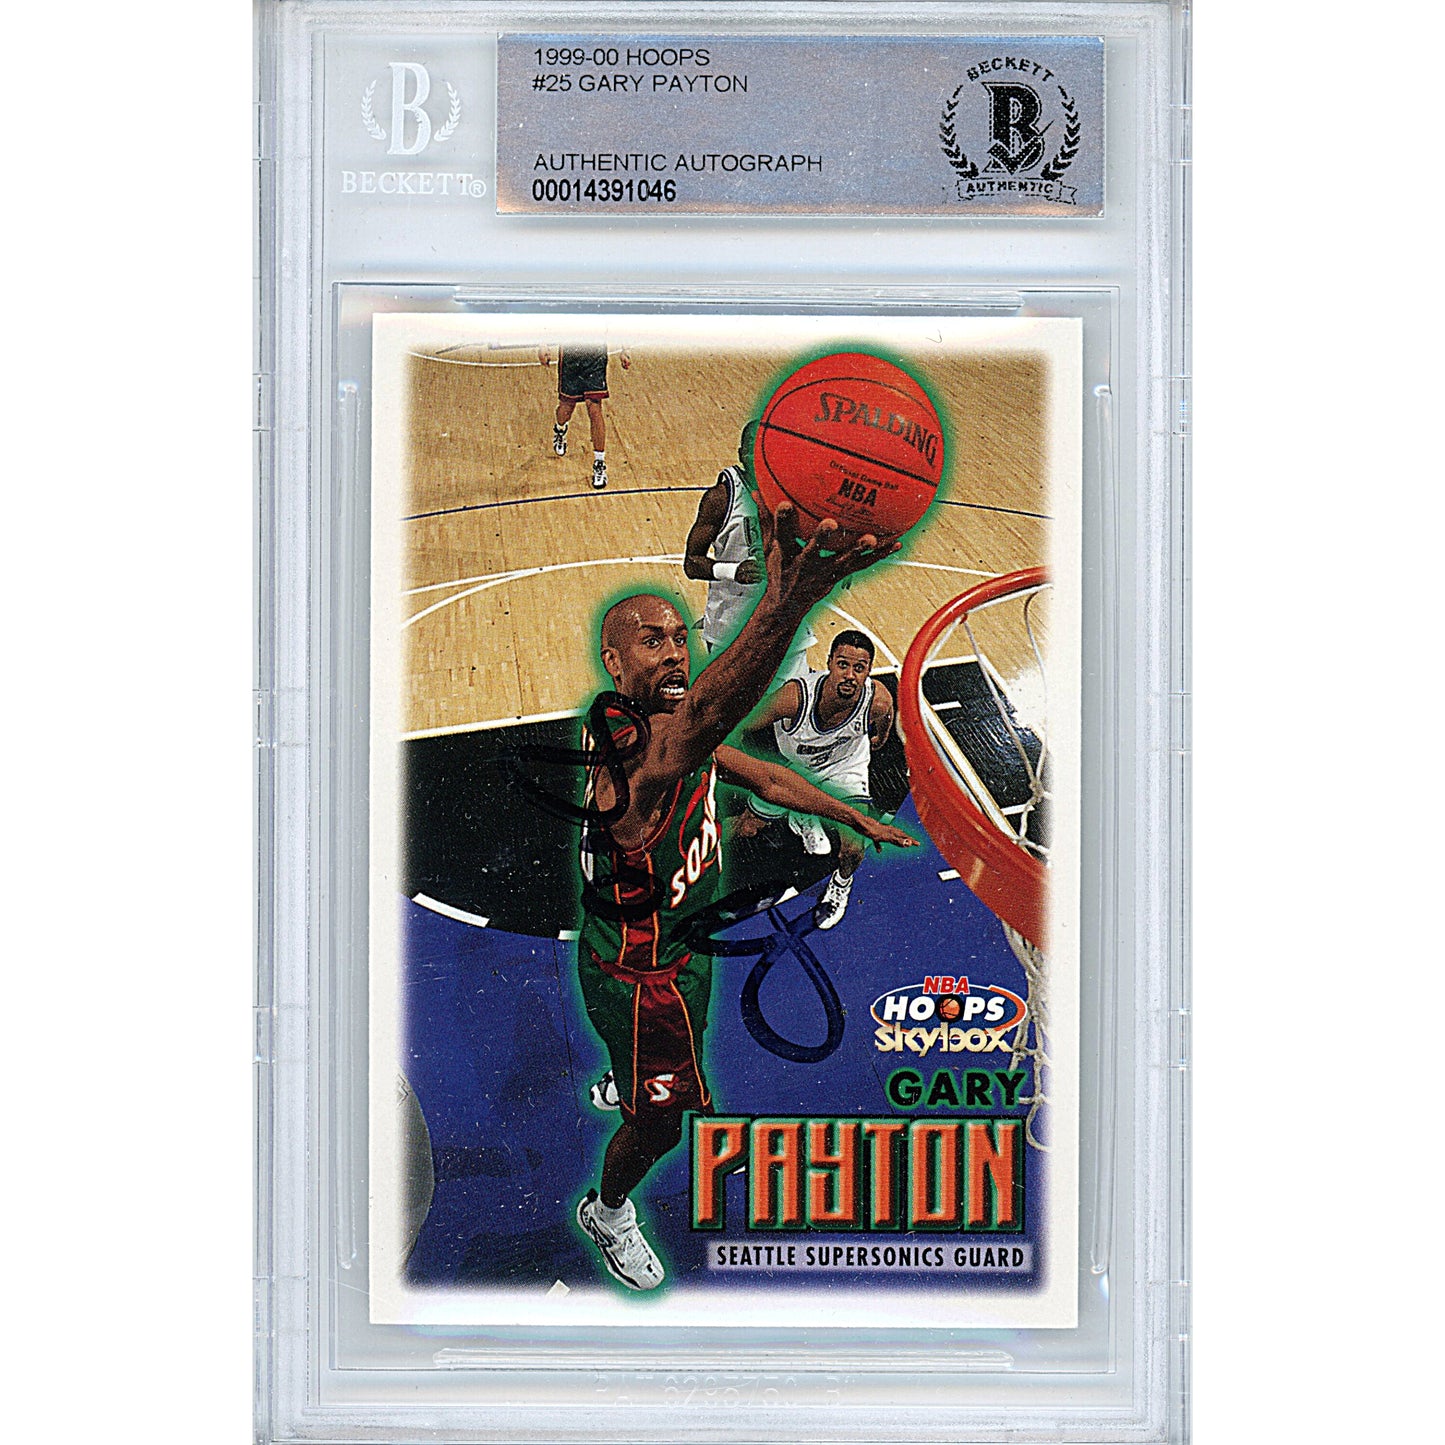 Basketballs- Autographed- Gary Payton Signed Seattle SuperSonics 1999-2000 NBA Hoops Basketball Card Beckett Slabbed 00014391046 - 101